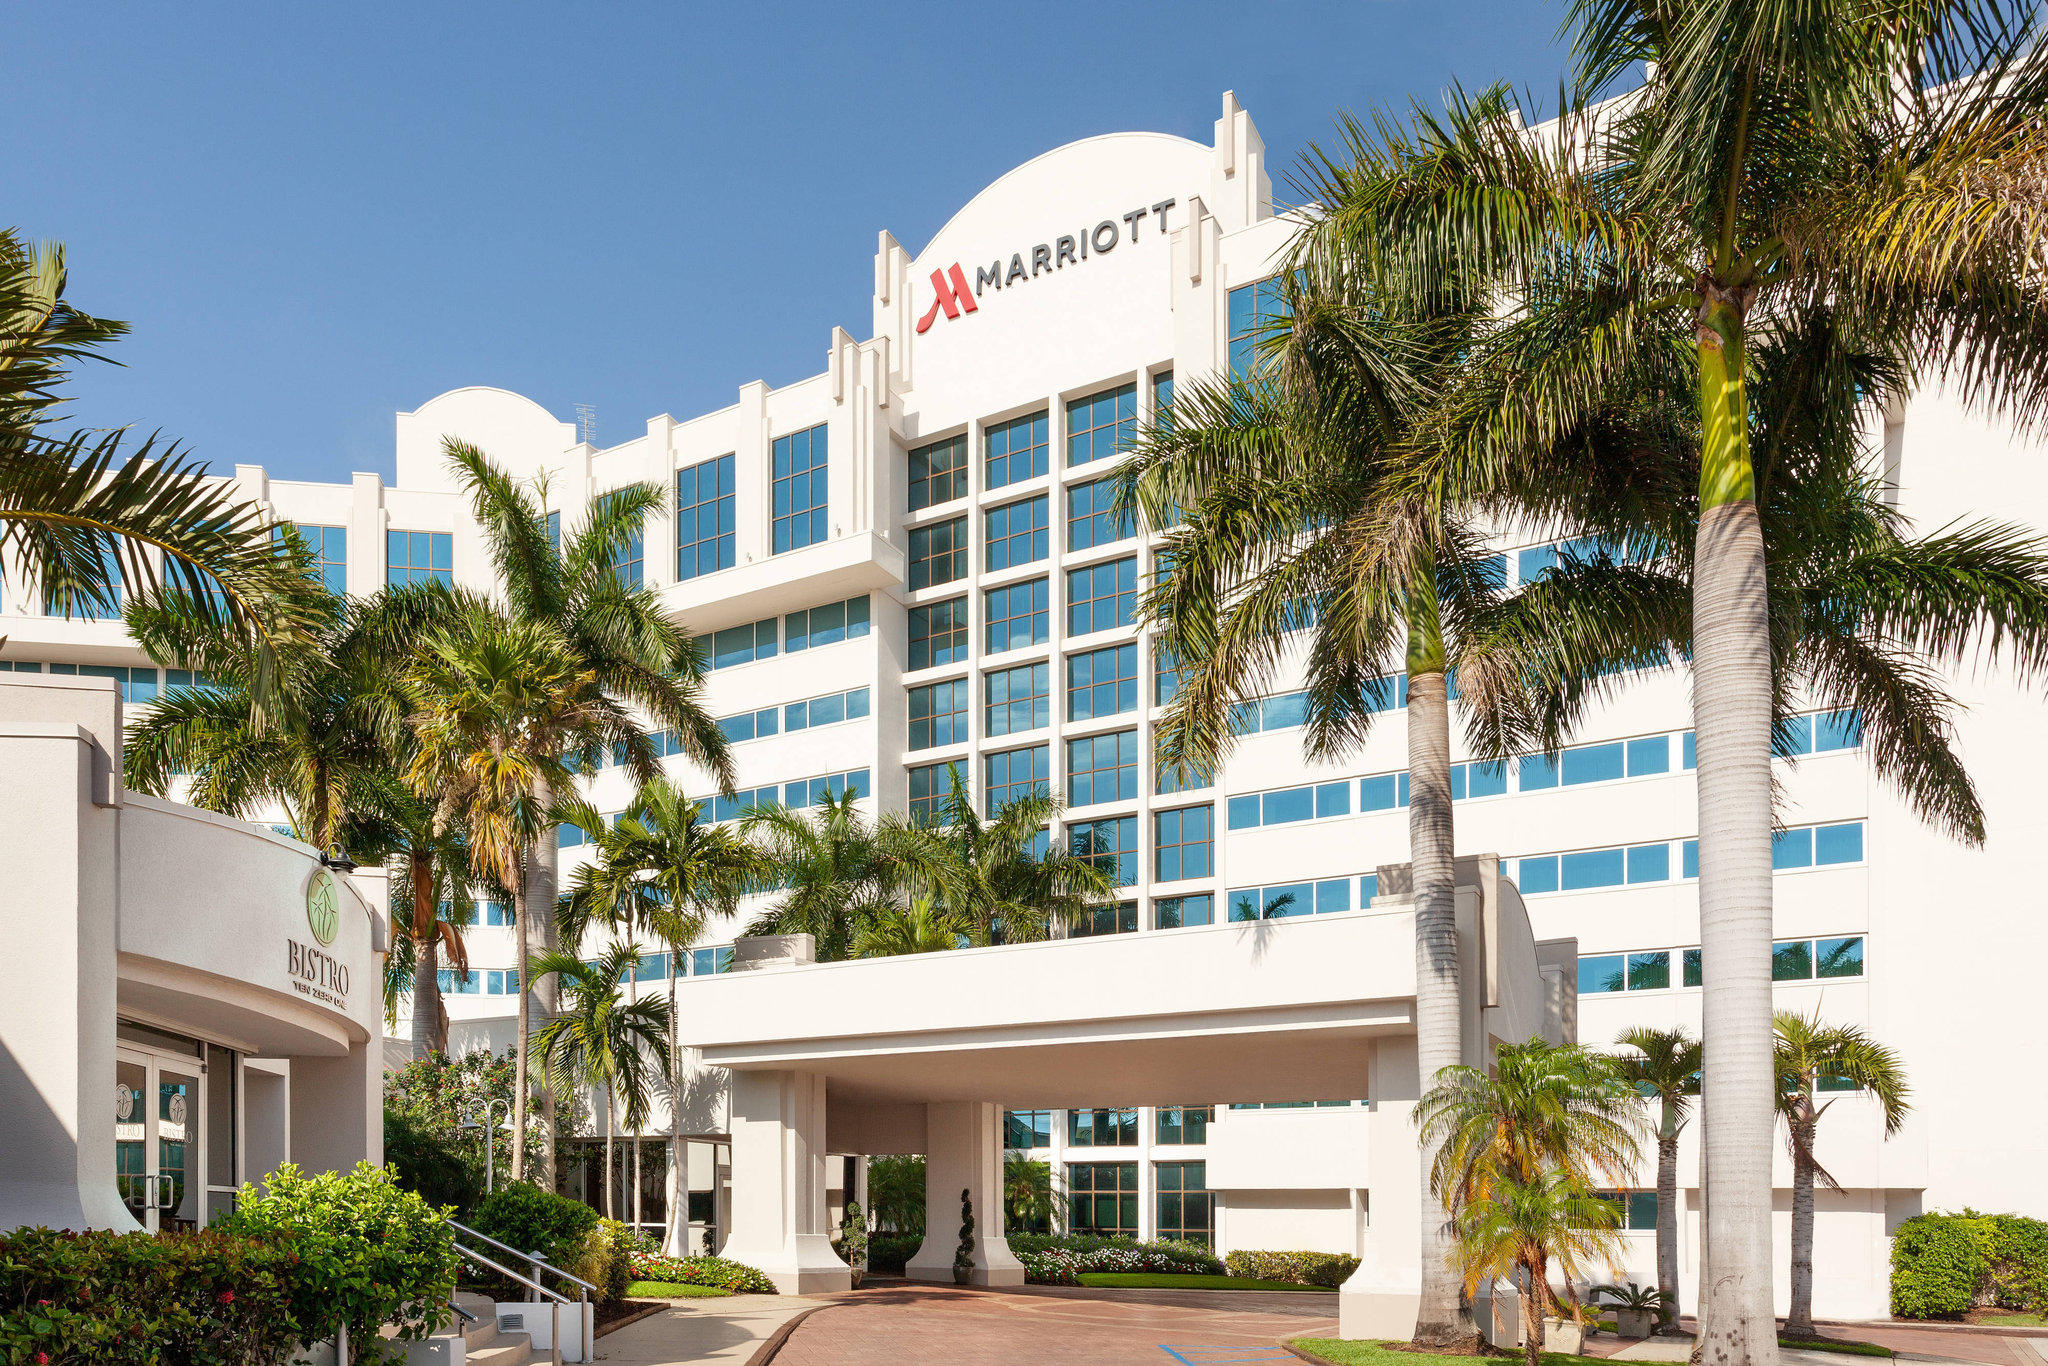 West Palm Beach Marriott Photo